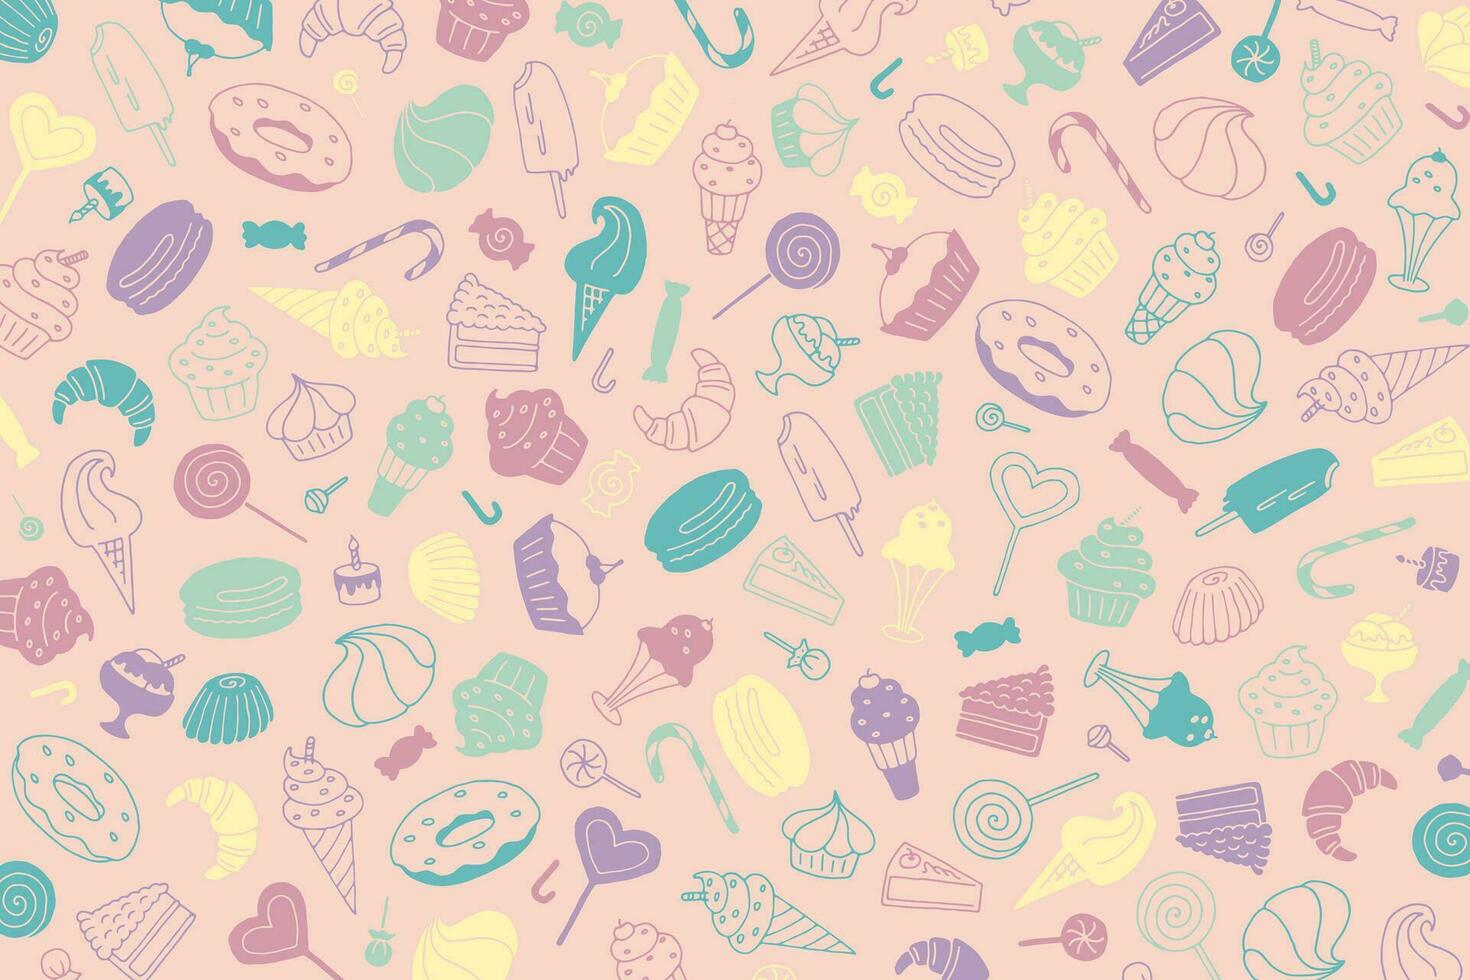 ligero rosado dulces antecedentes. editable garabatear ilustración de magdalenas, pasteles, dulces, pastelitos, hielo crema, piruletas vector